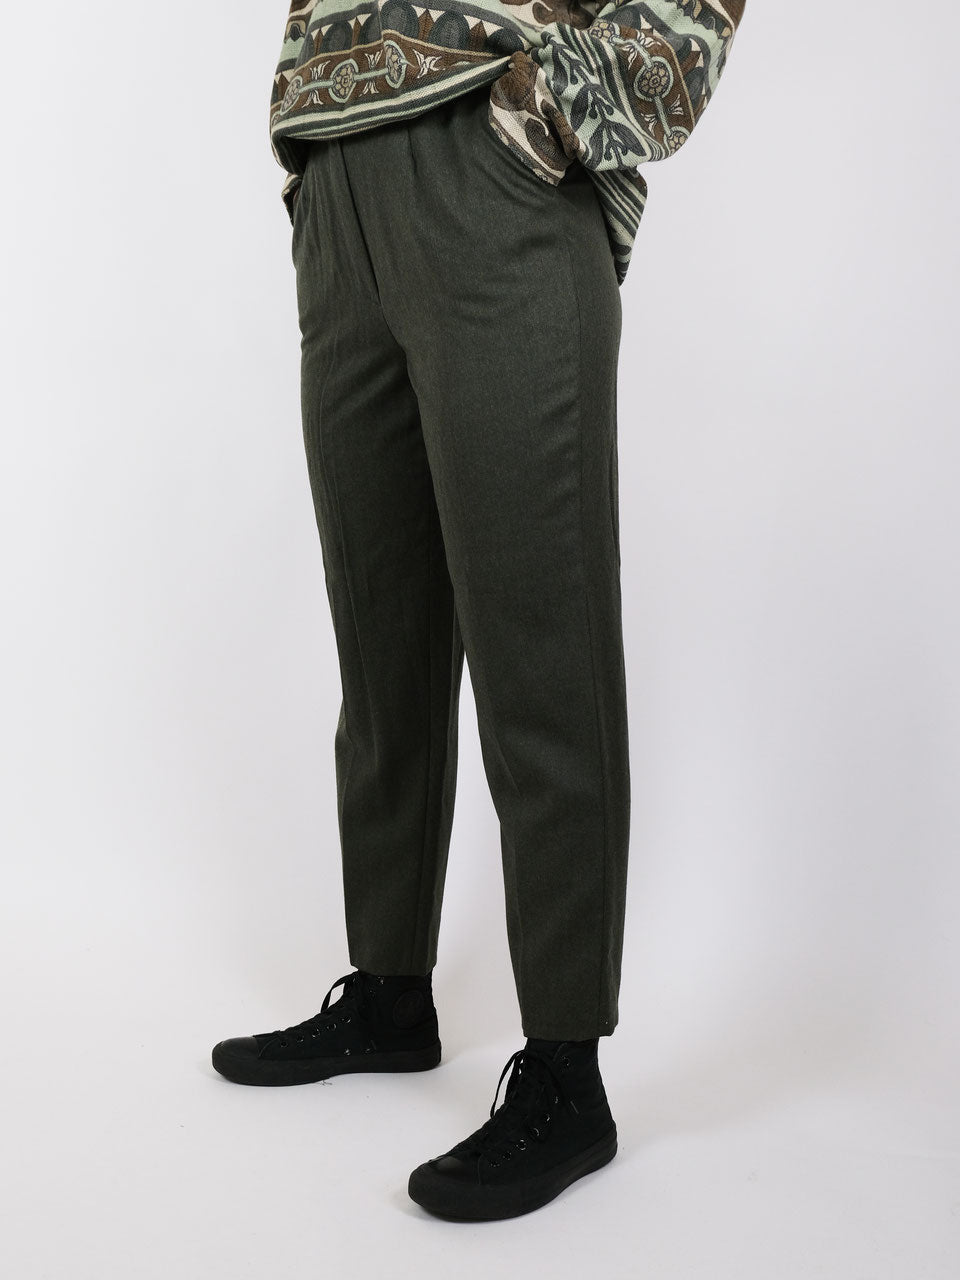 Gray-green wool trousers